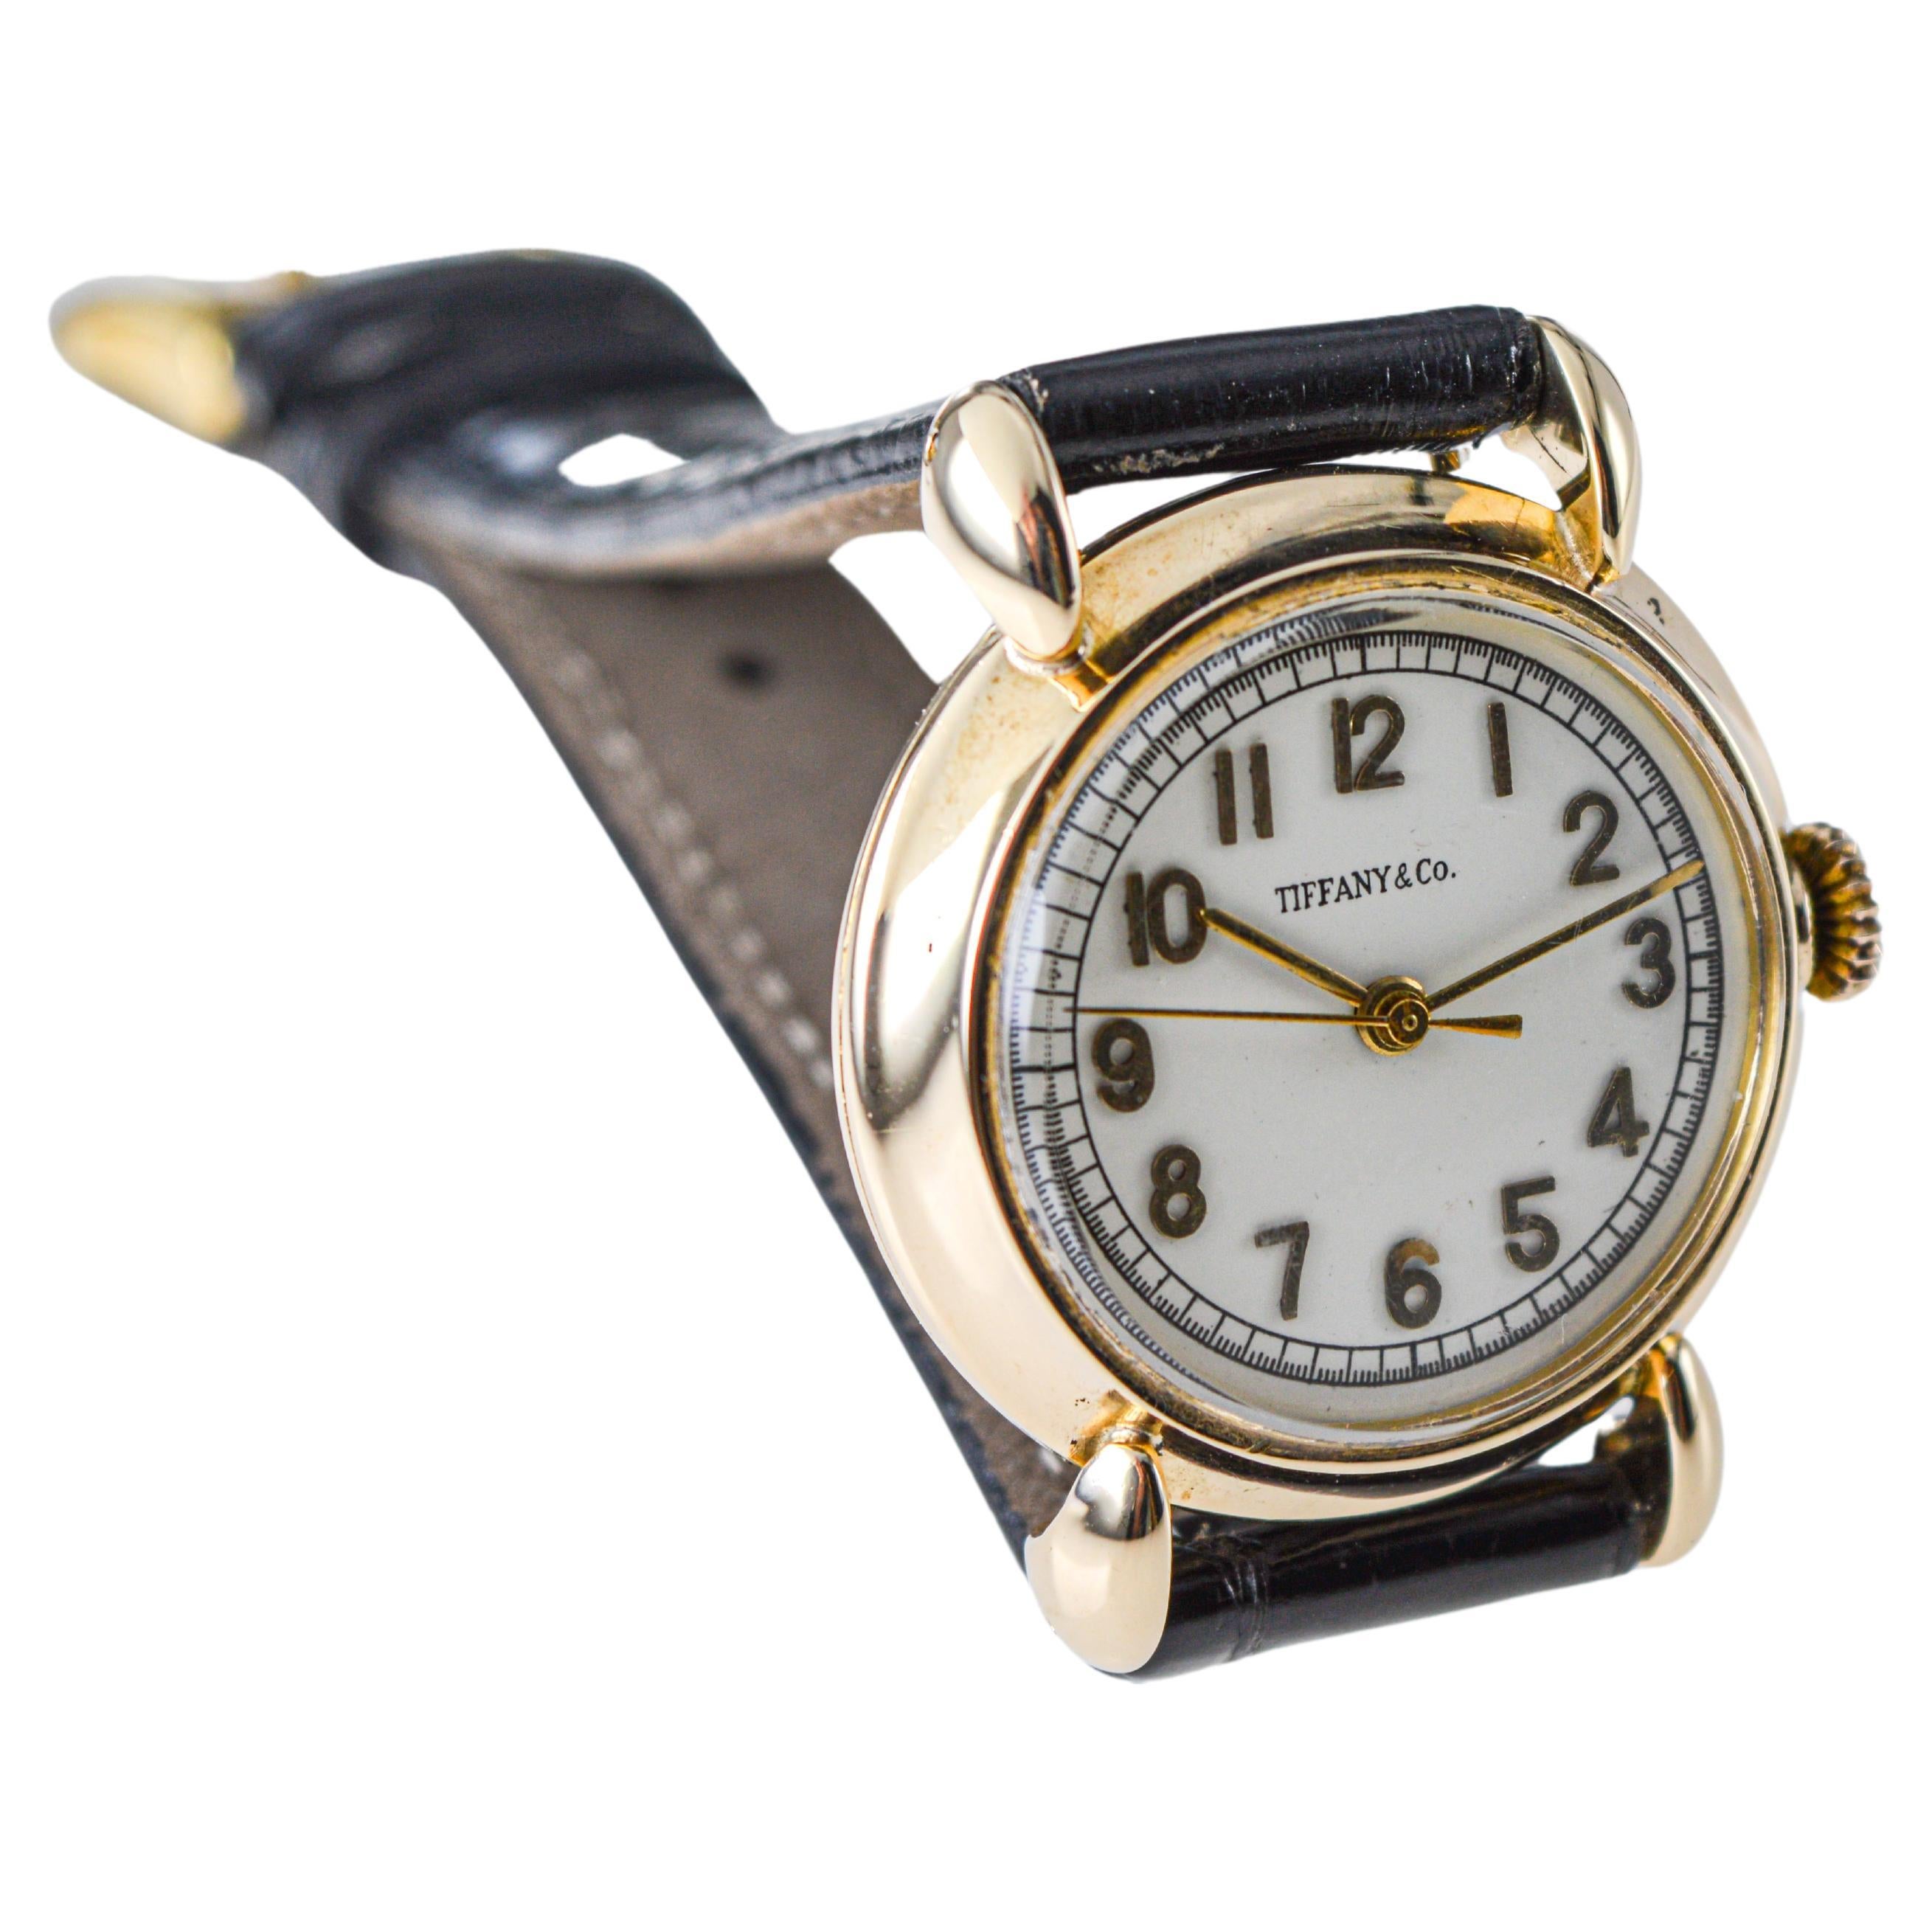 Tiffany & Co. by Schaffhausen International Watch Company Art Deco Style Watch For Sale 6